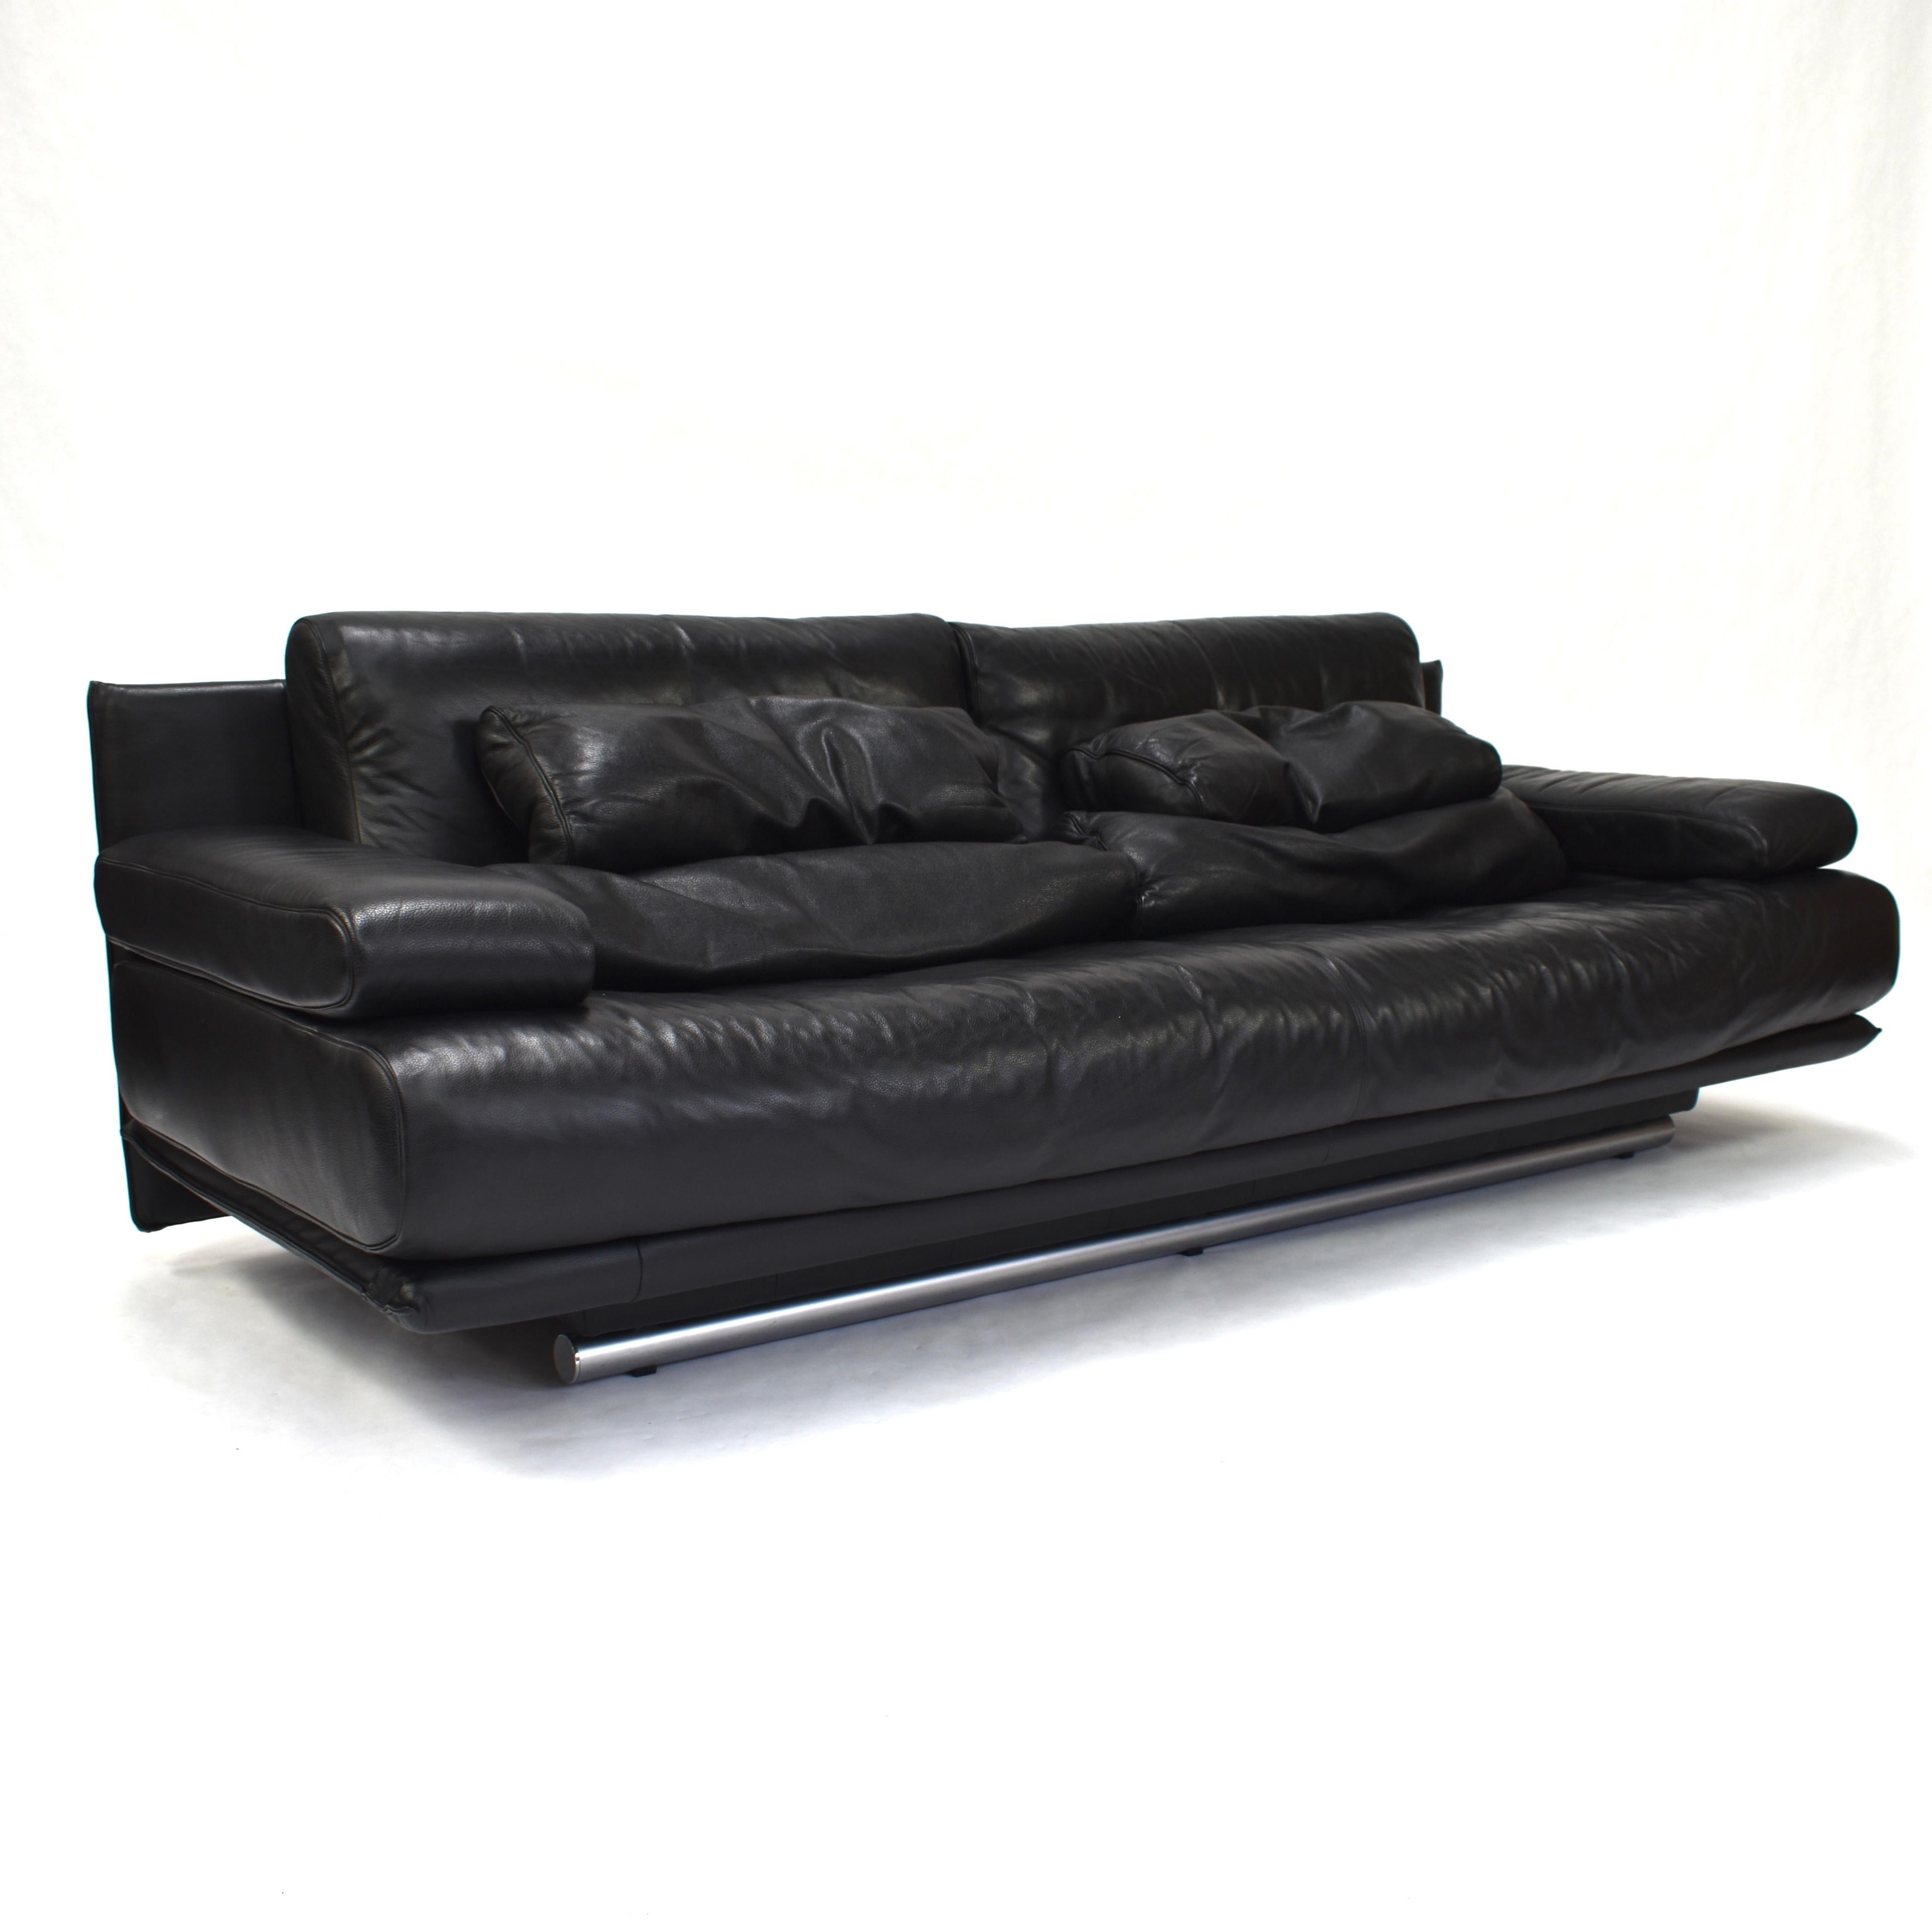 Rolf Benz Model 6500 Sofa in Black Leather by Mathias Hoffmann 4